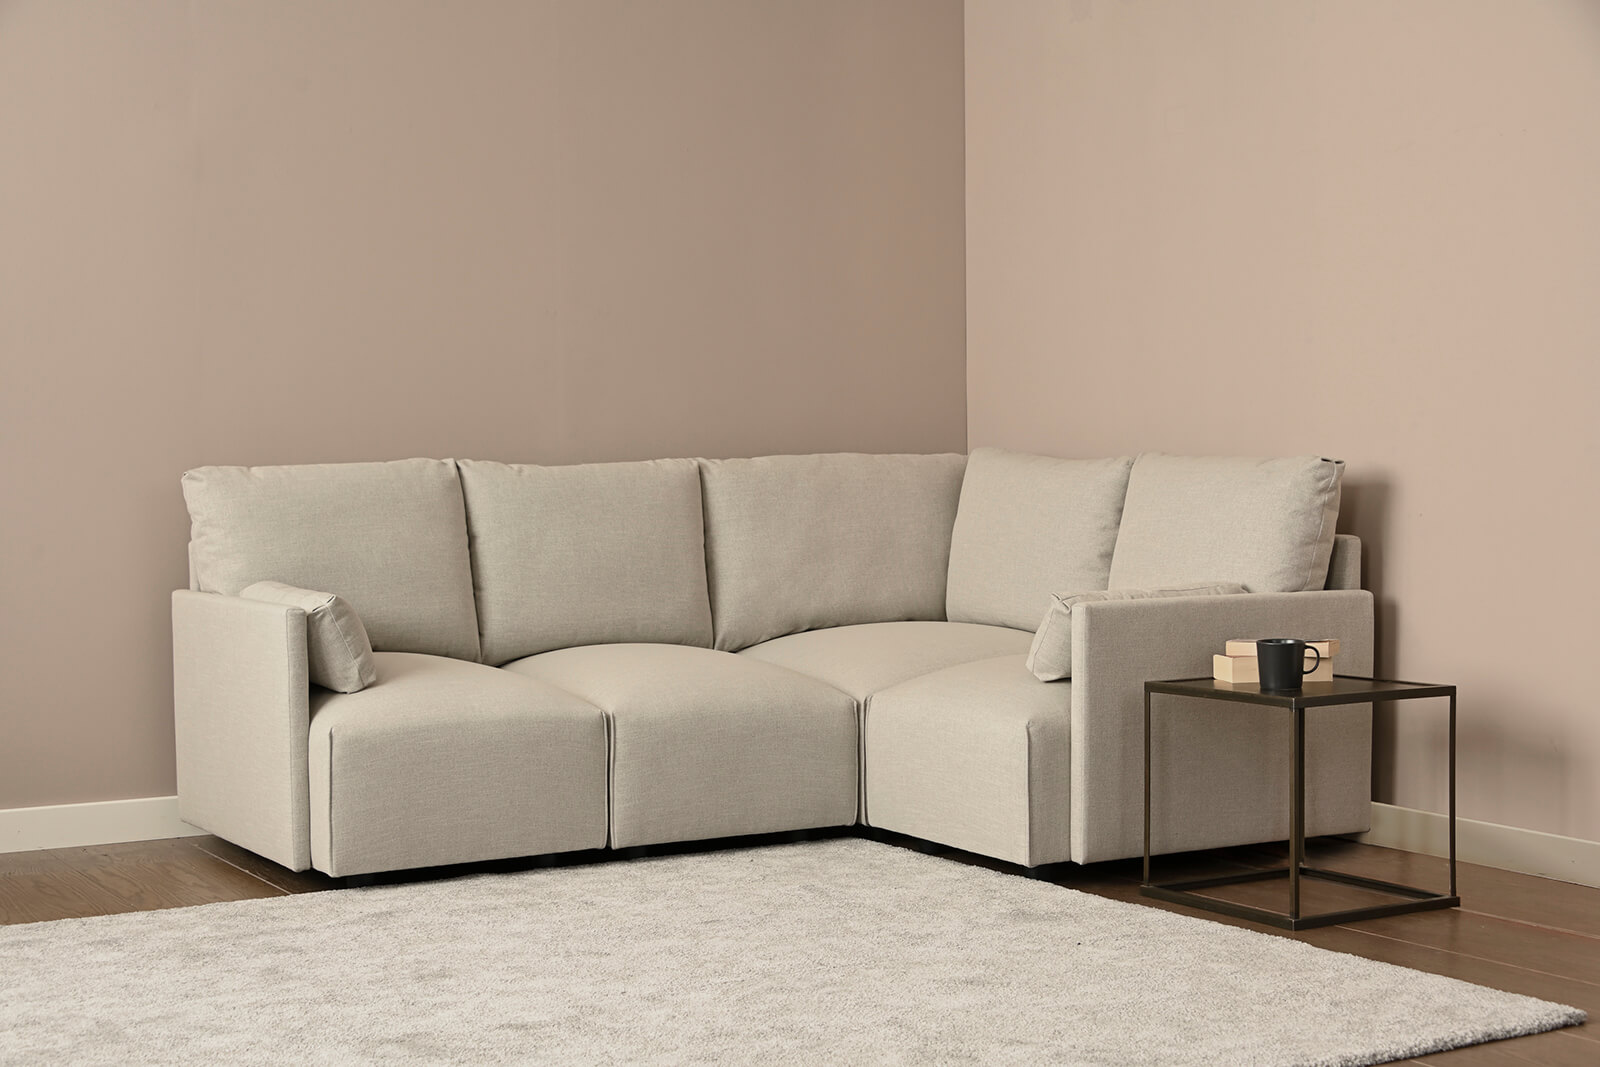 HB04-small-corner-sofa-3q-coconut-3x2-lifestyle